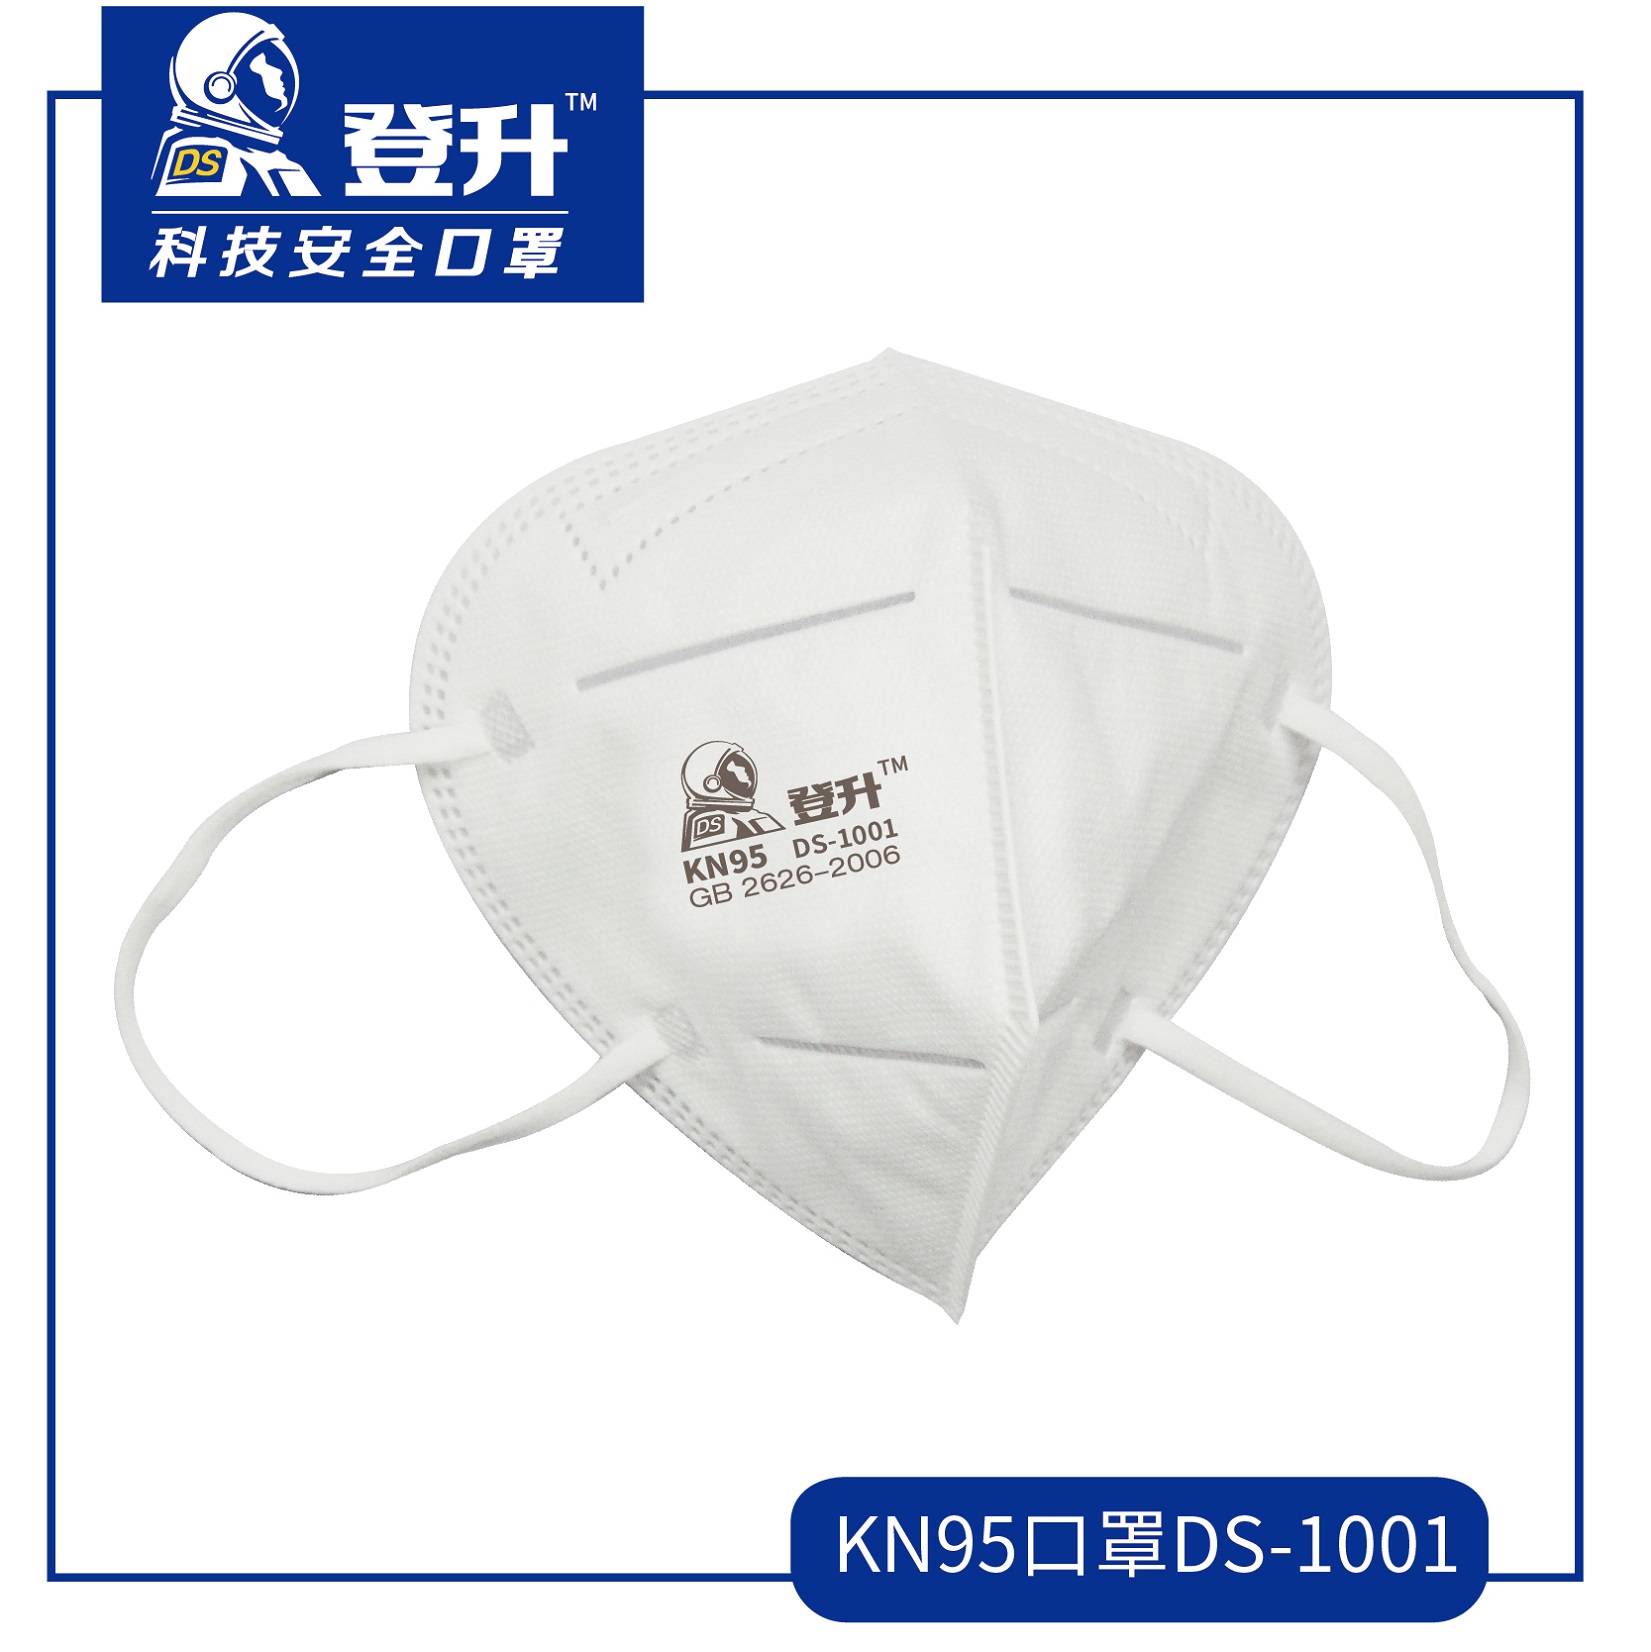 KN95 mask without valve